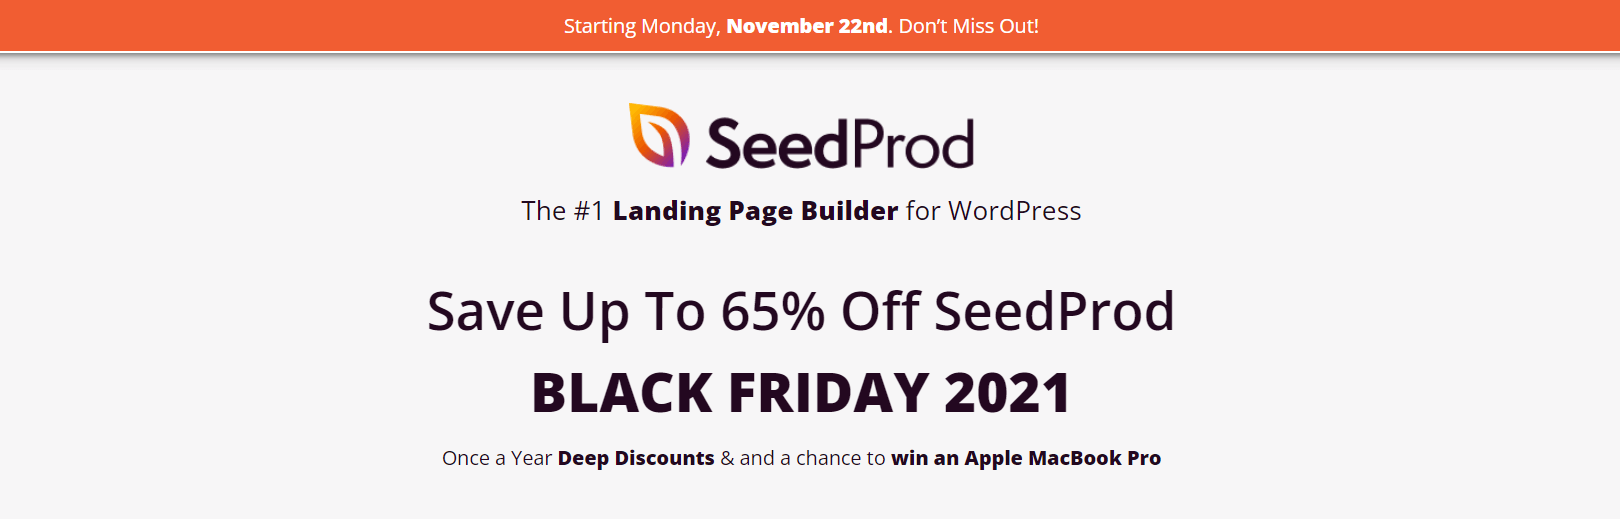 Seedprod Black Friday Deal 2021